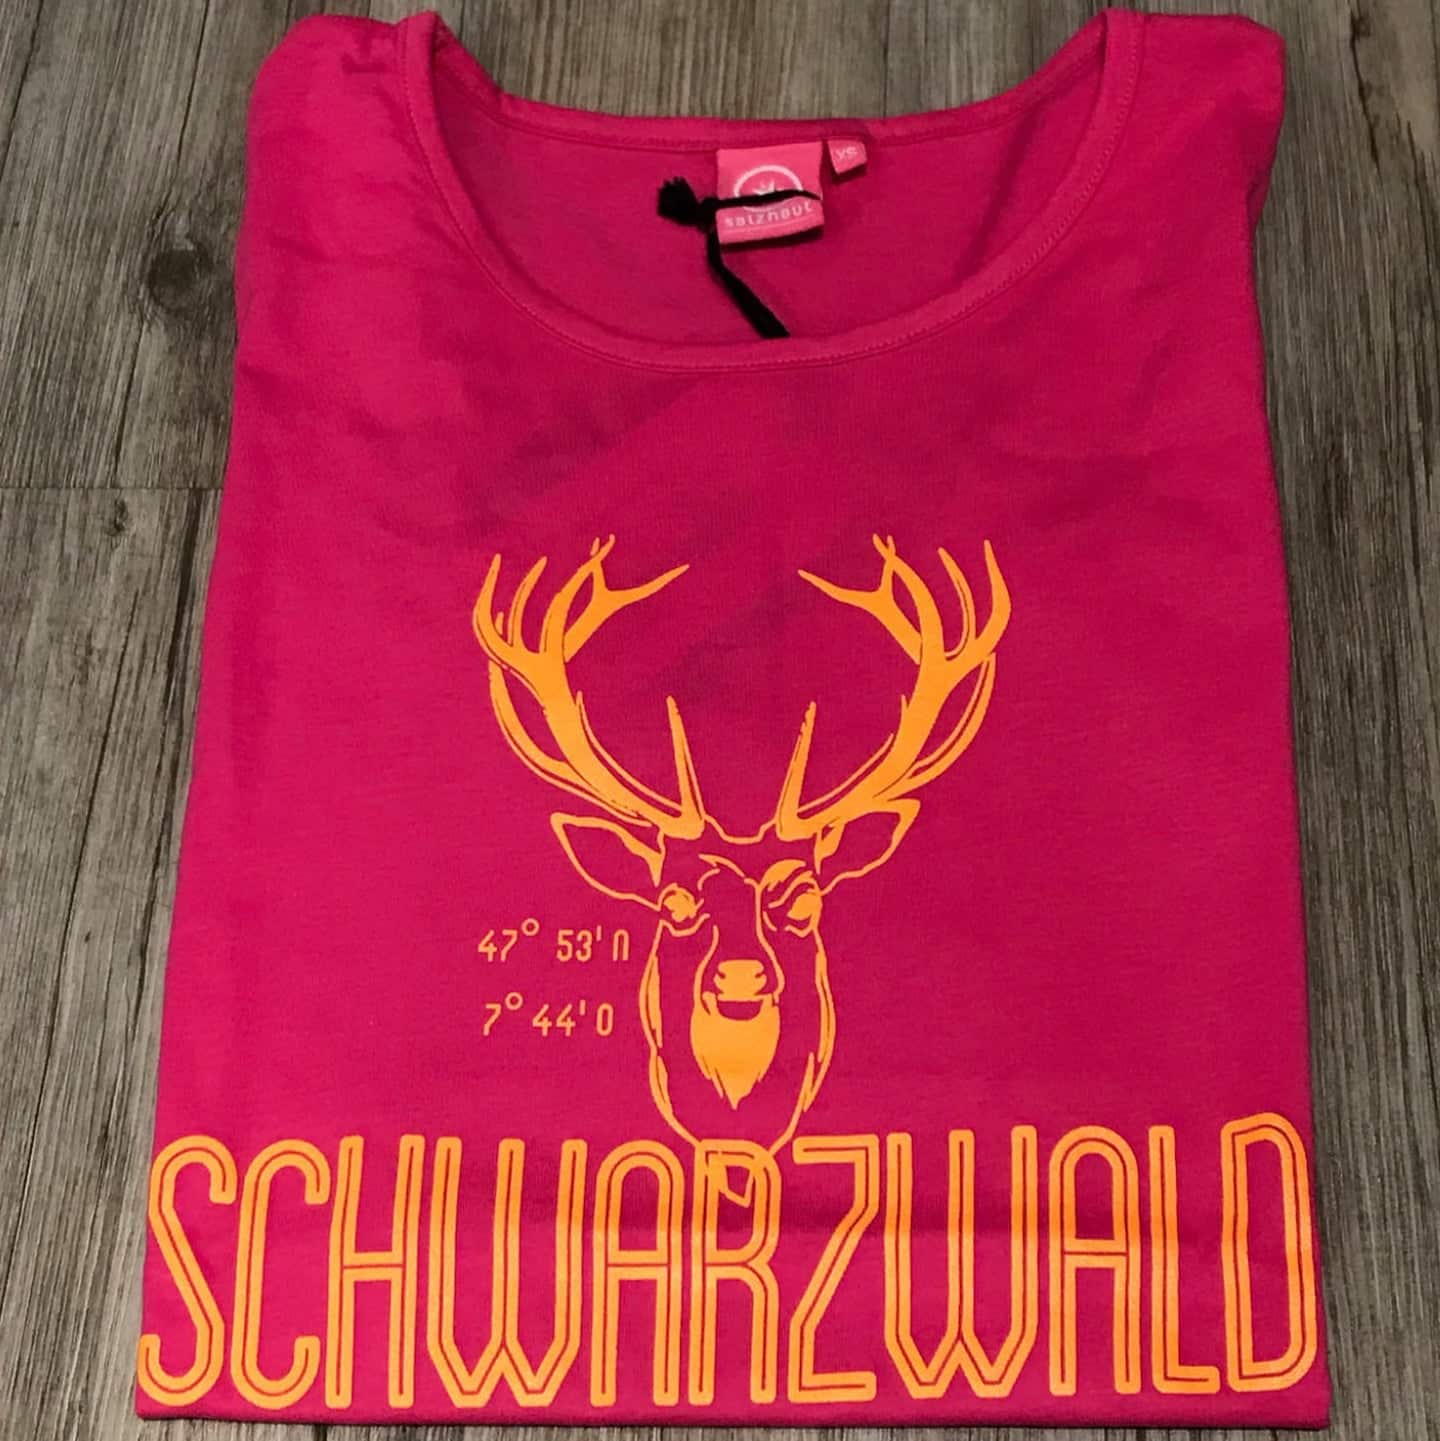 schwarzwald-t-shirt-damen-pink-neonorange-1440